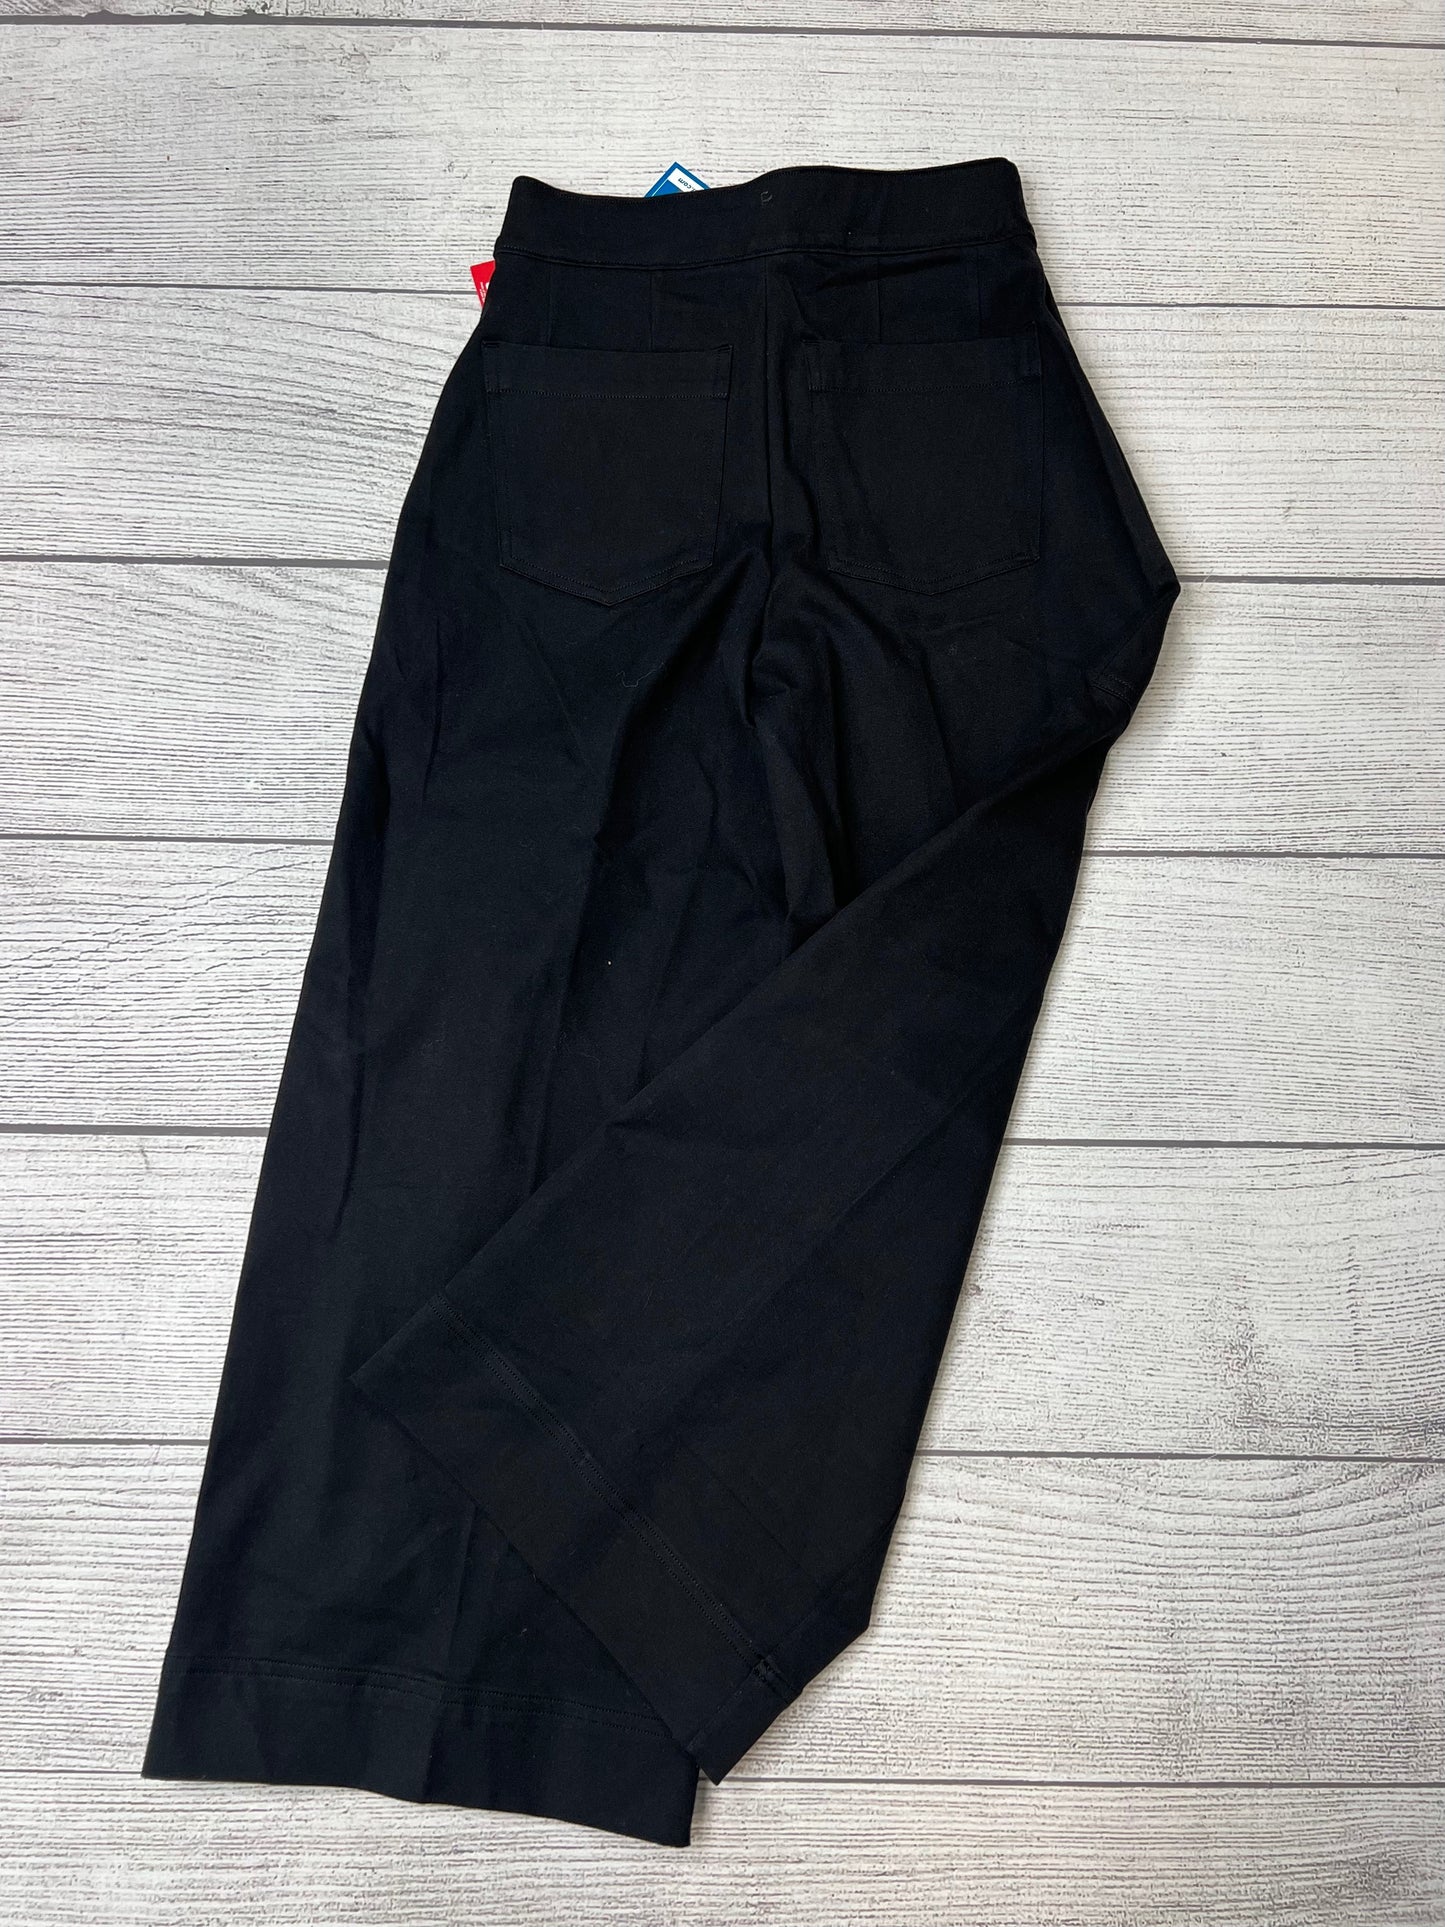 Black Pants Designer Spanx, Size Xs